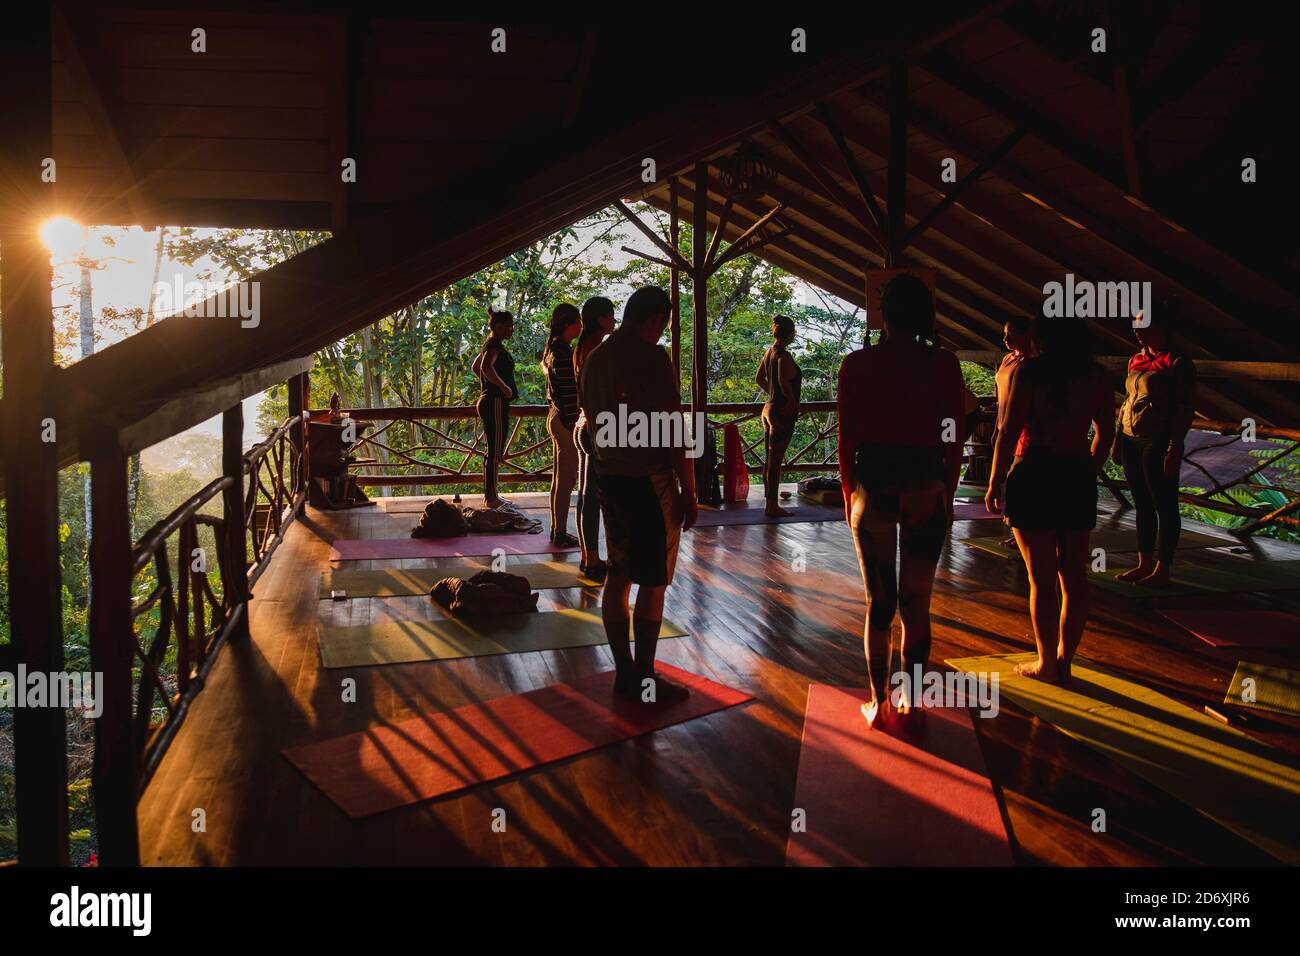 Amazon Jungle yoga retreat Stock Photo